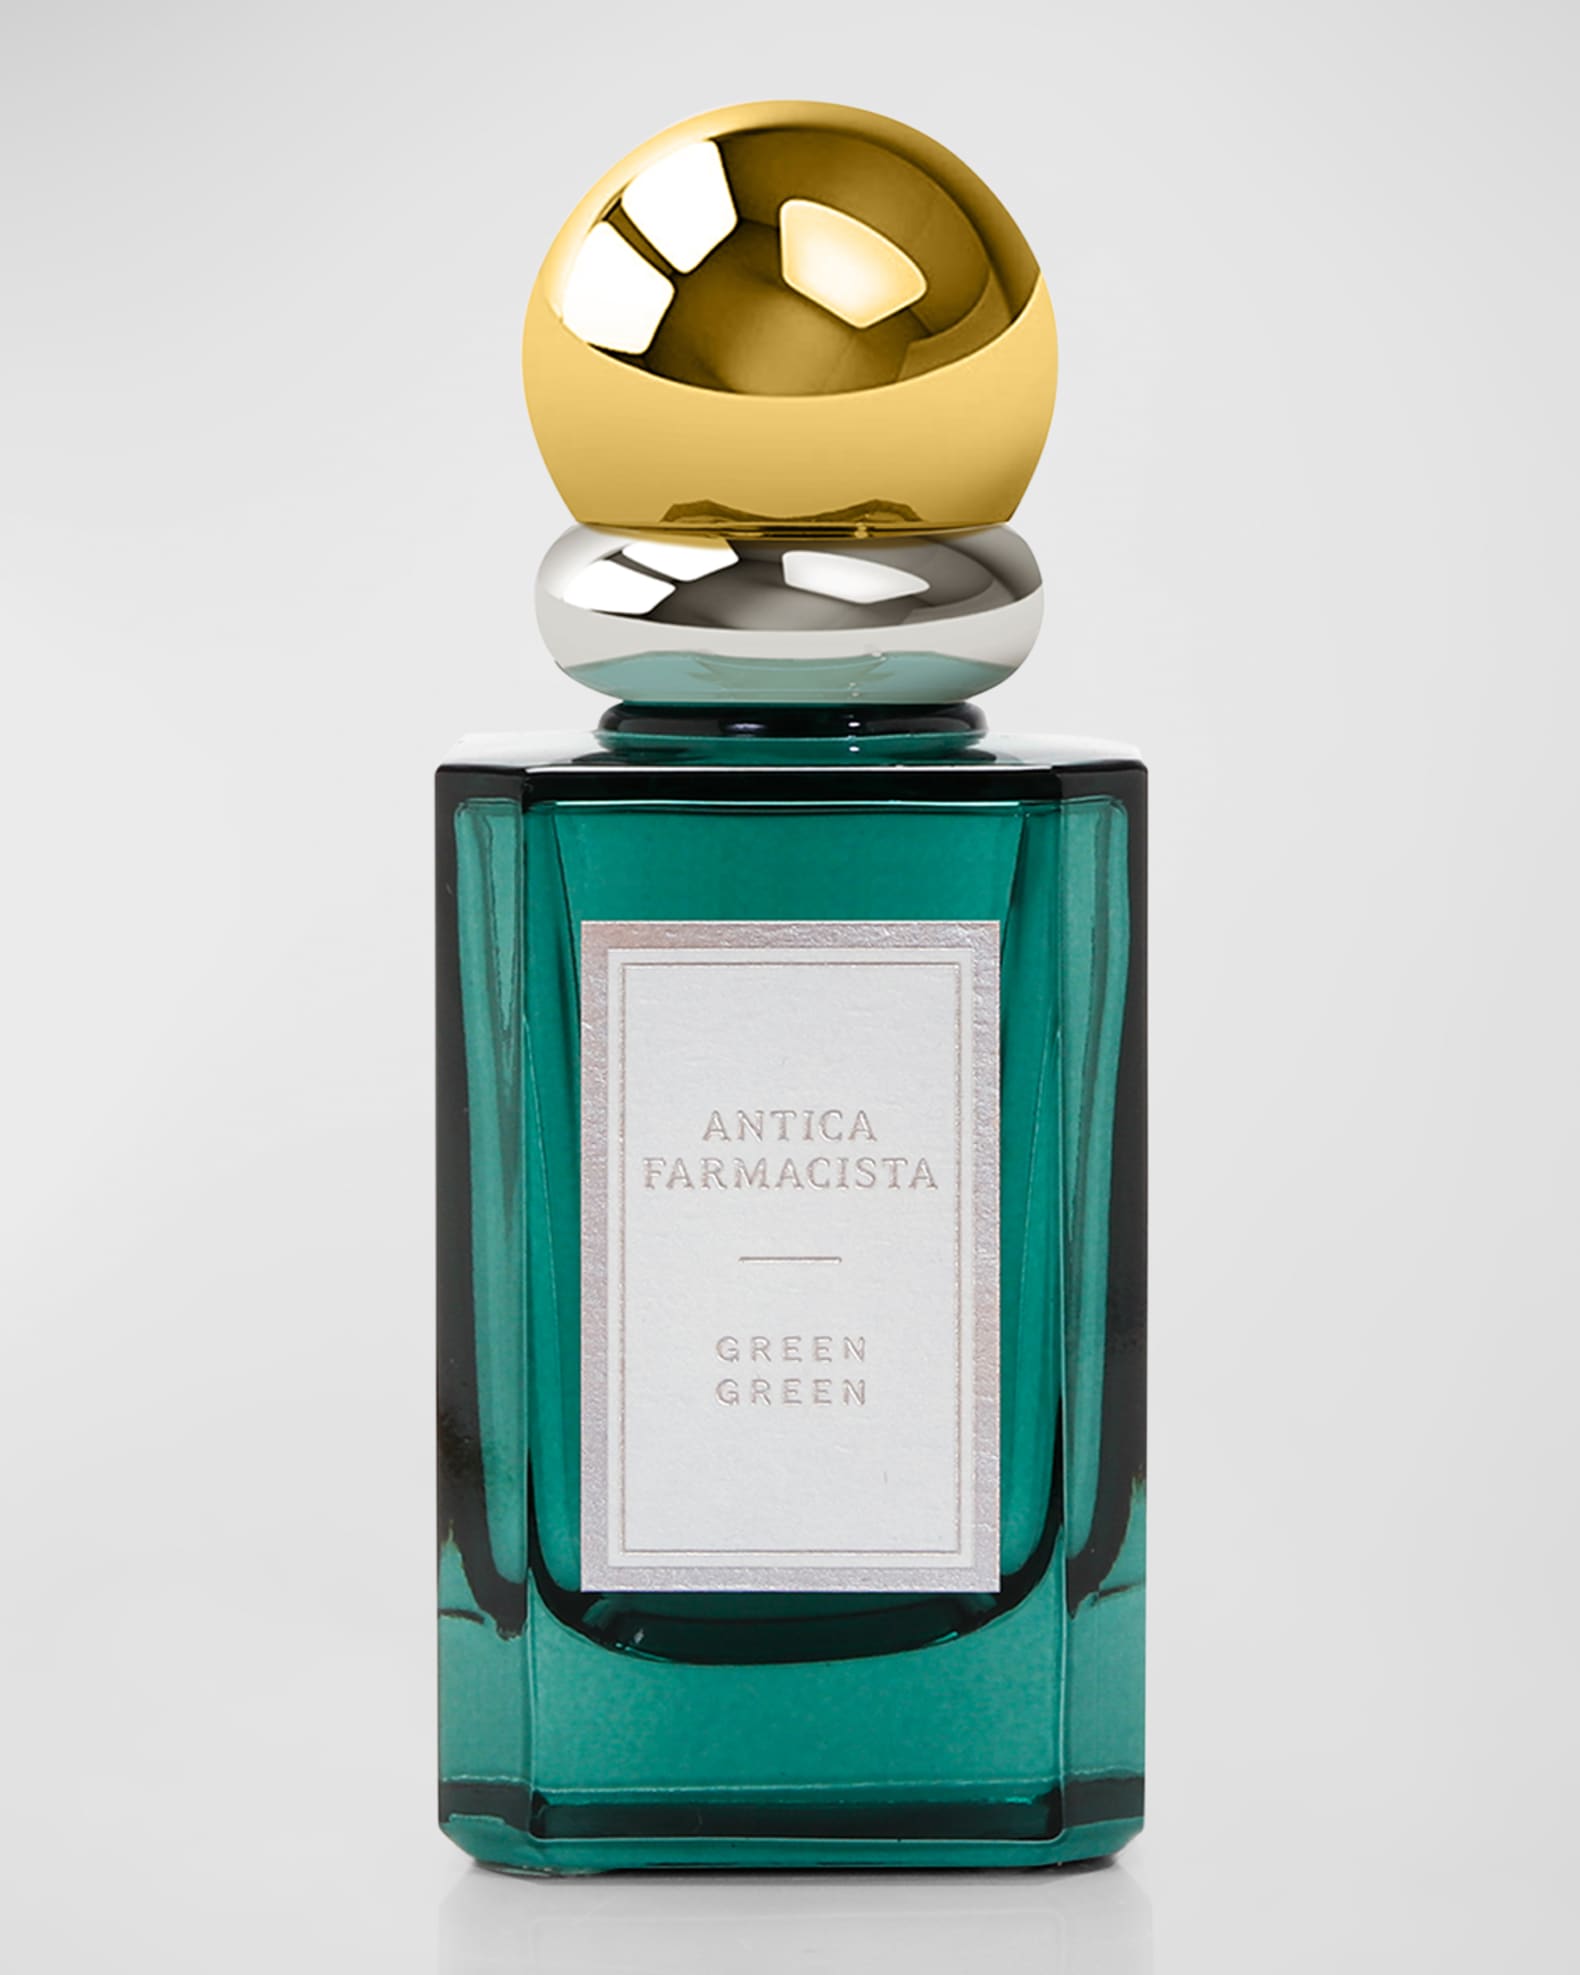 Handbag Designer To The Stars Judith Leiber Launches 7-In-1 Perfume